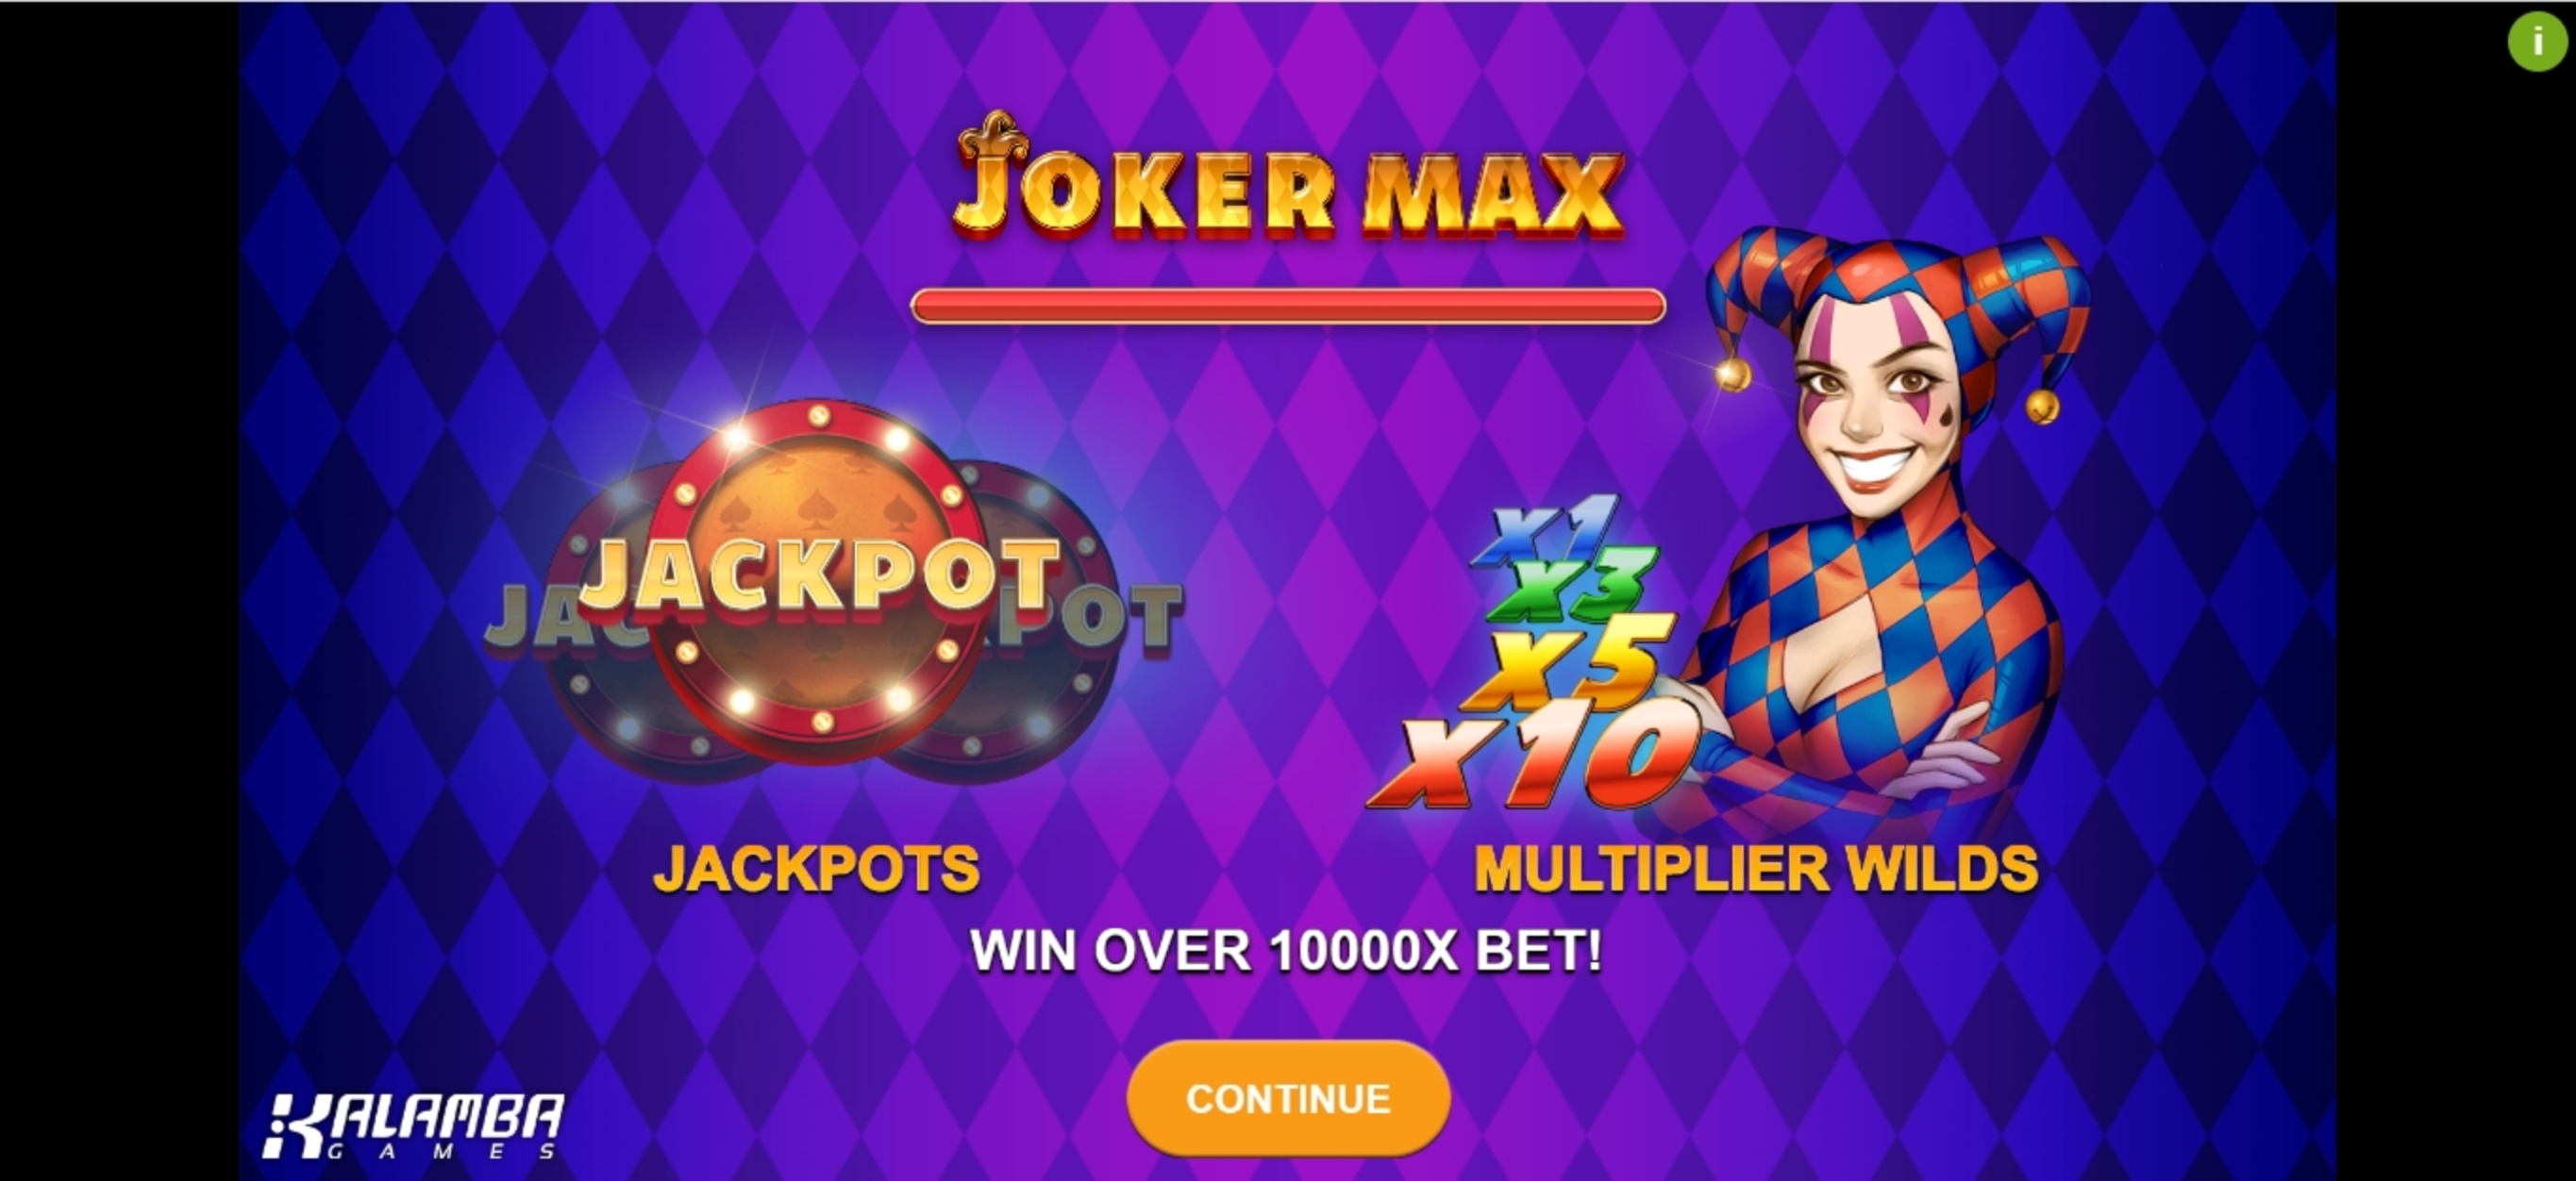 Play Joker MAX Free Casino Slot Game by Kalamba Games